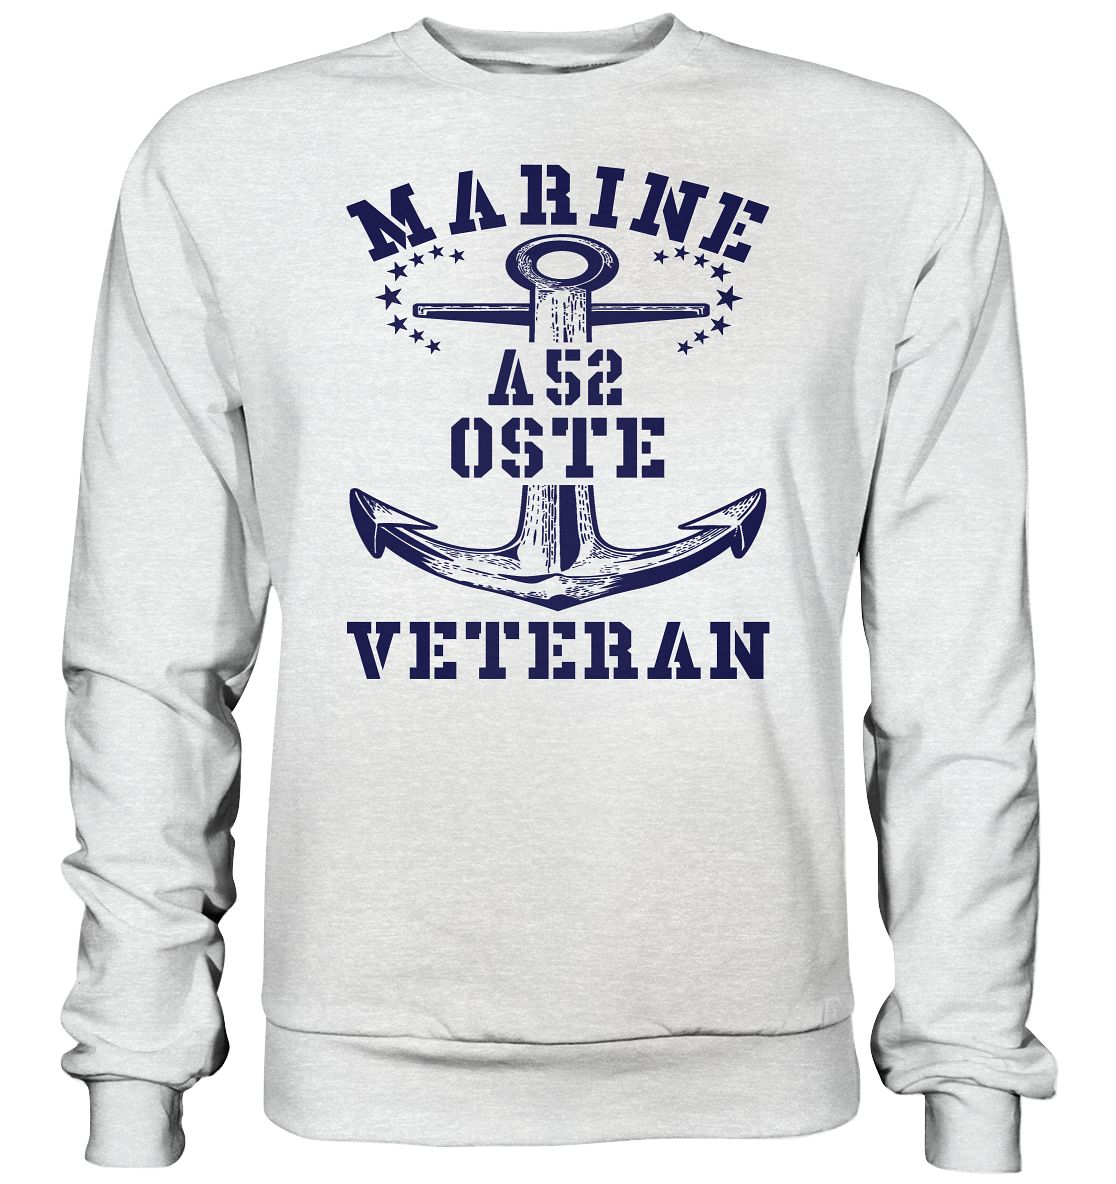 FD-Boot A52 OSTE Marine Veteran - Premium Sweatshirt